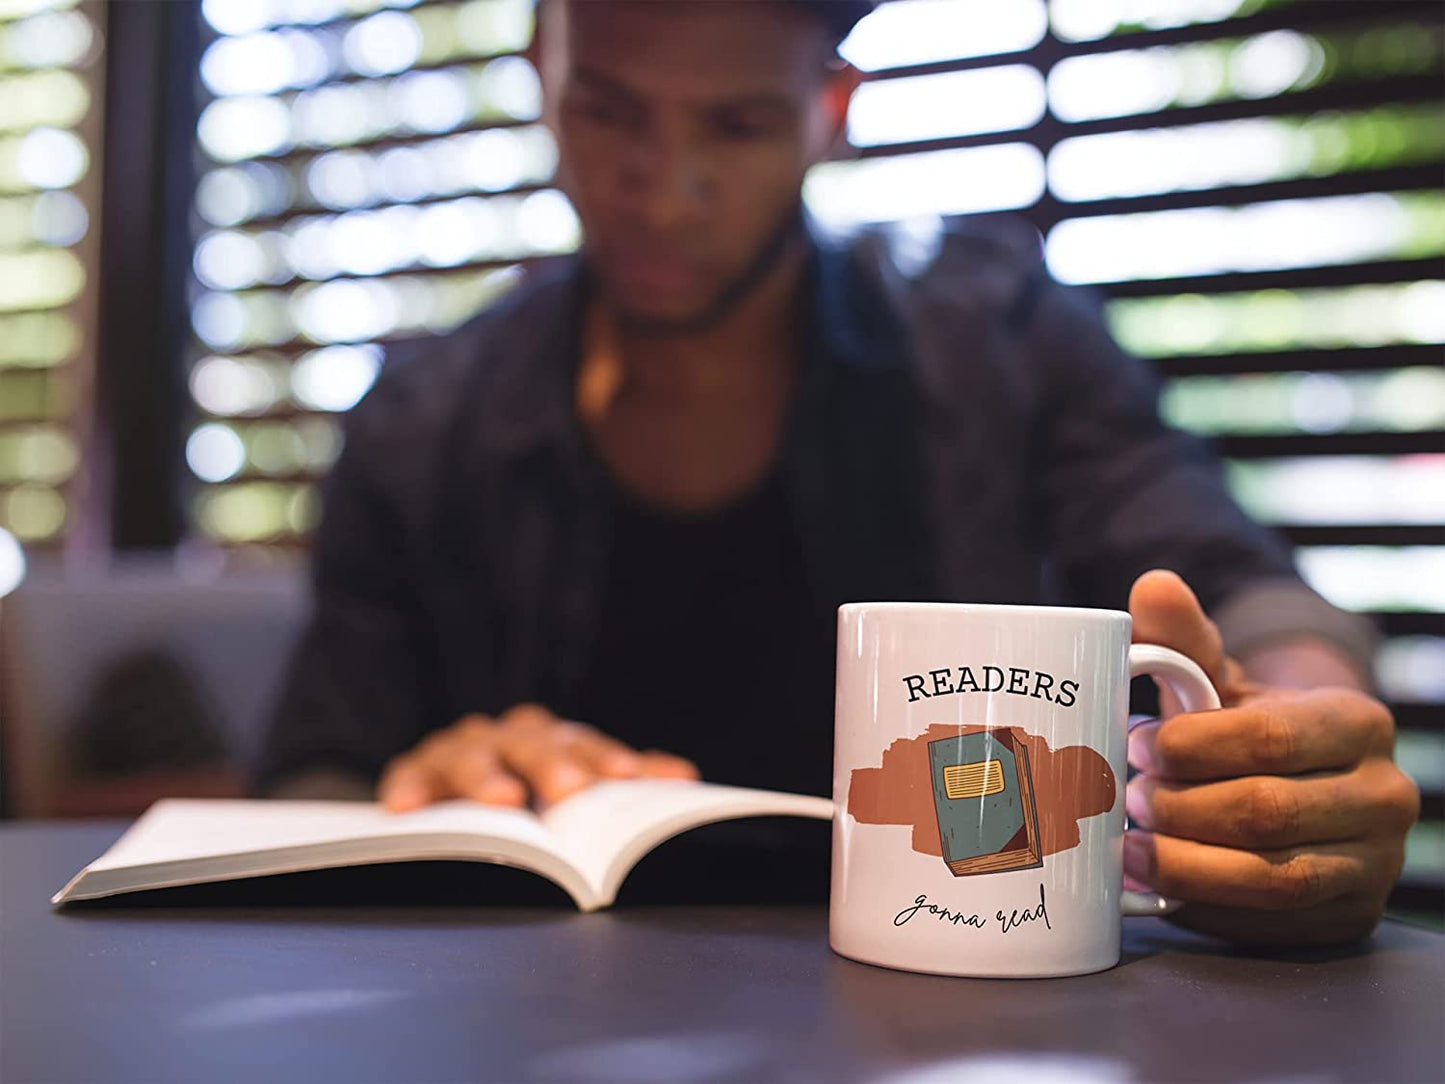 Readers Gonna Read Designer Coffee Mug for Bookworms